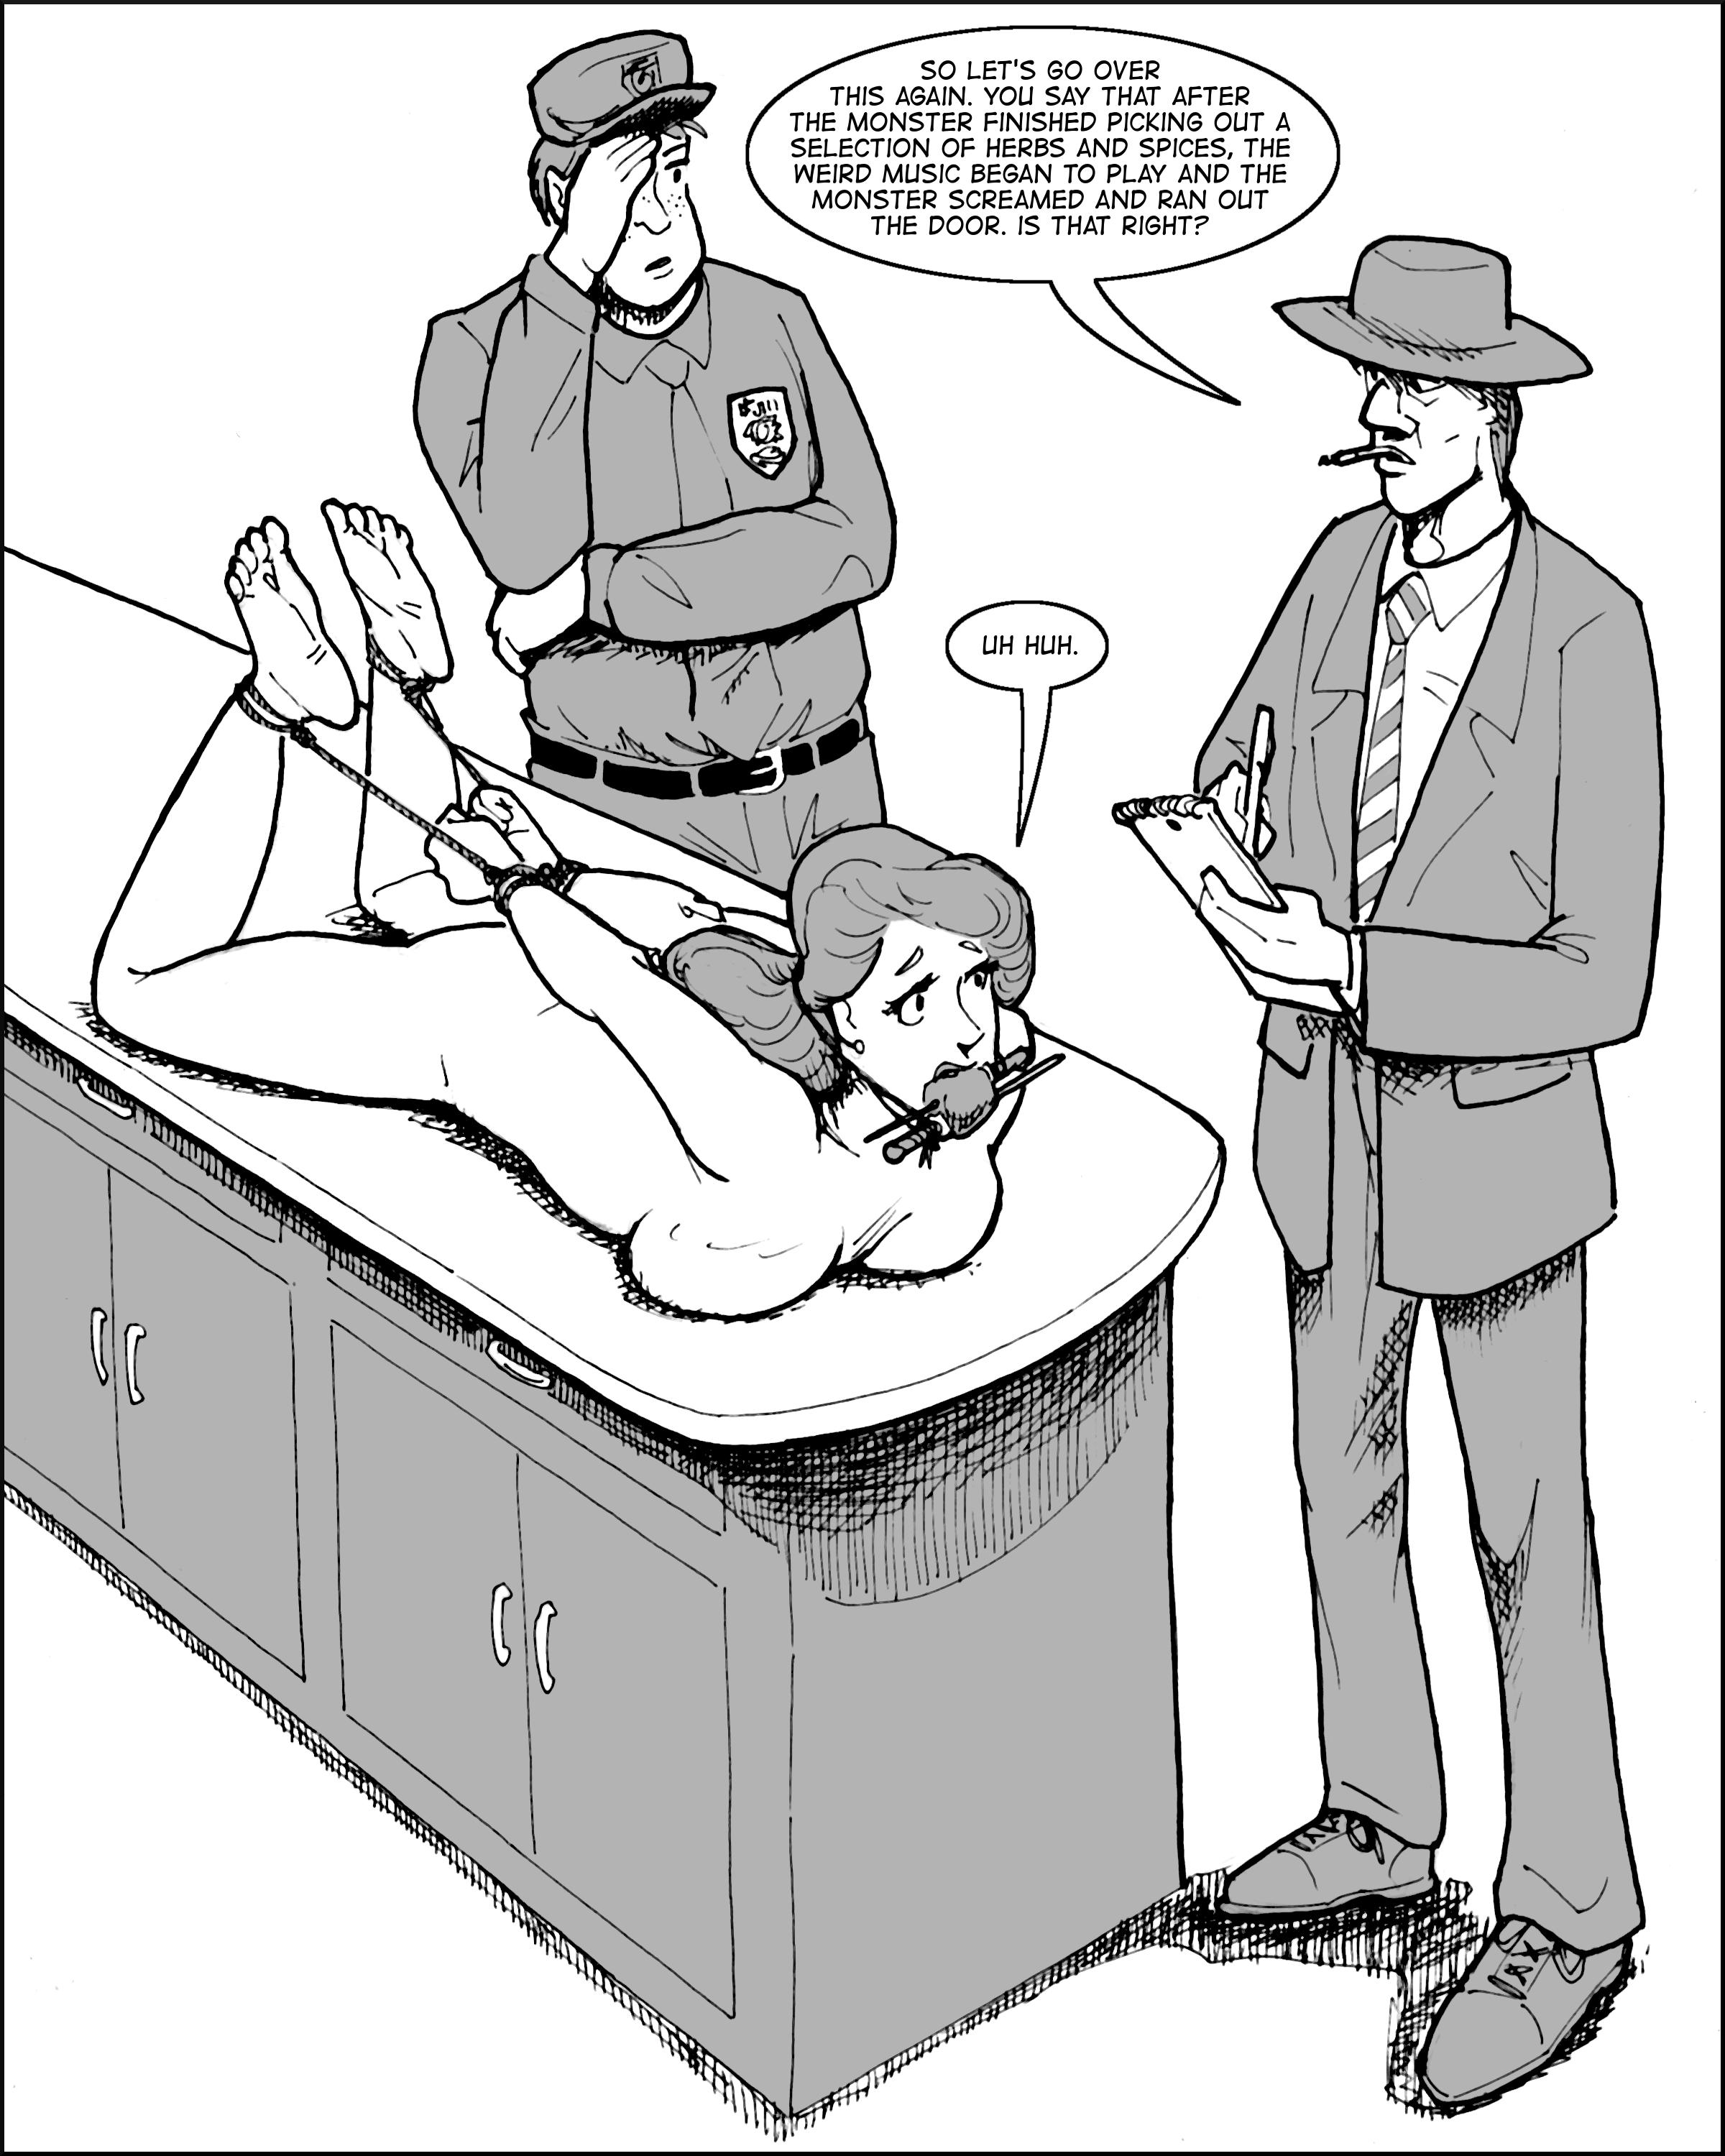 Tough interrogation methods.